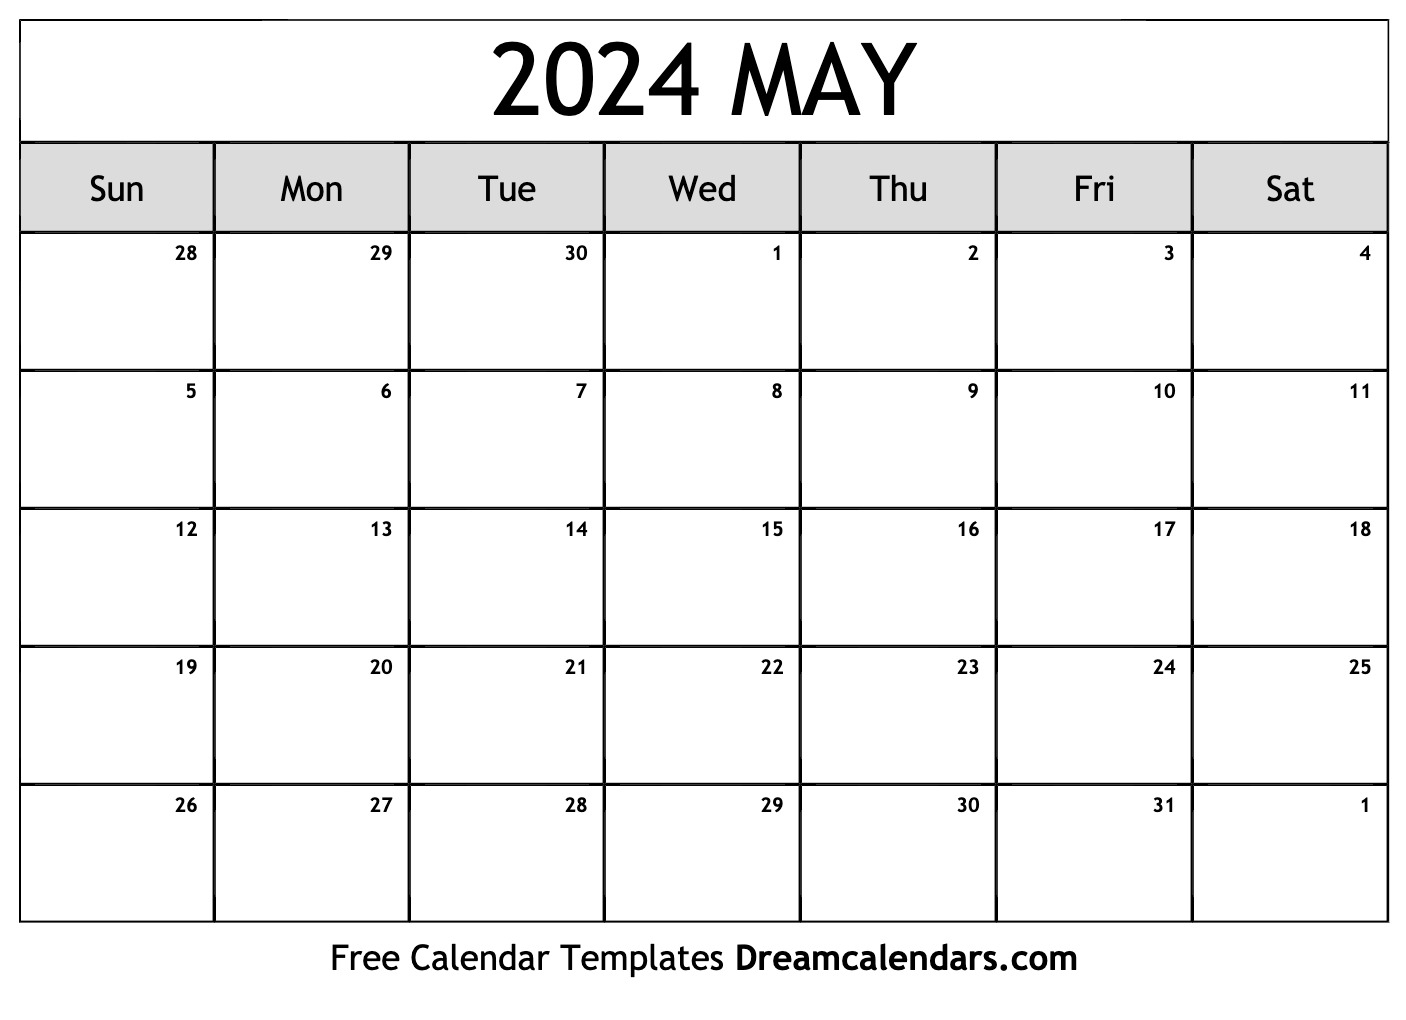 May 2024 Calendar | Free Blank Printable With Holidays for Free Printable 2024 May Calendar